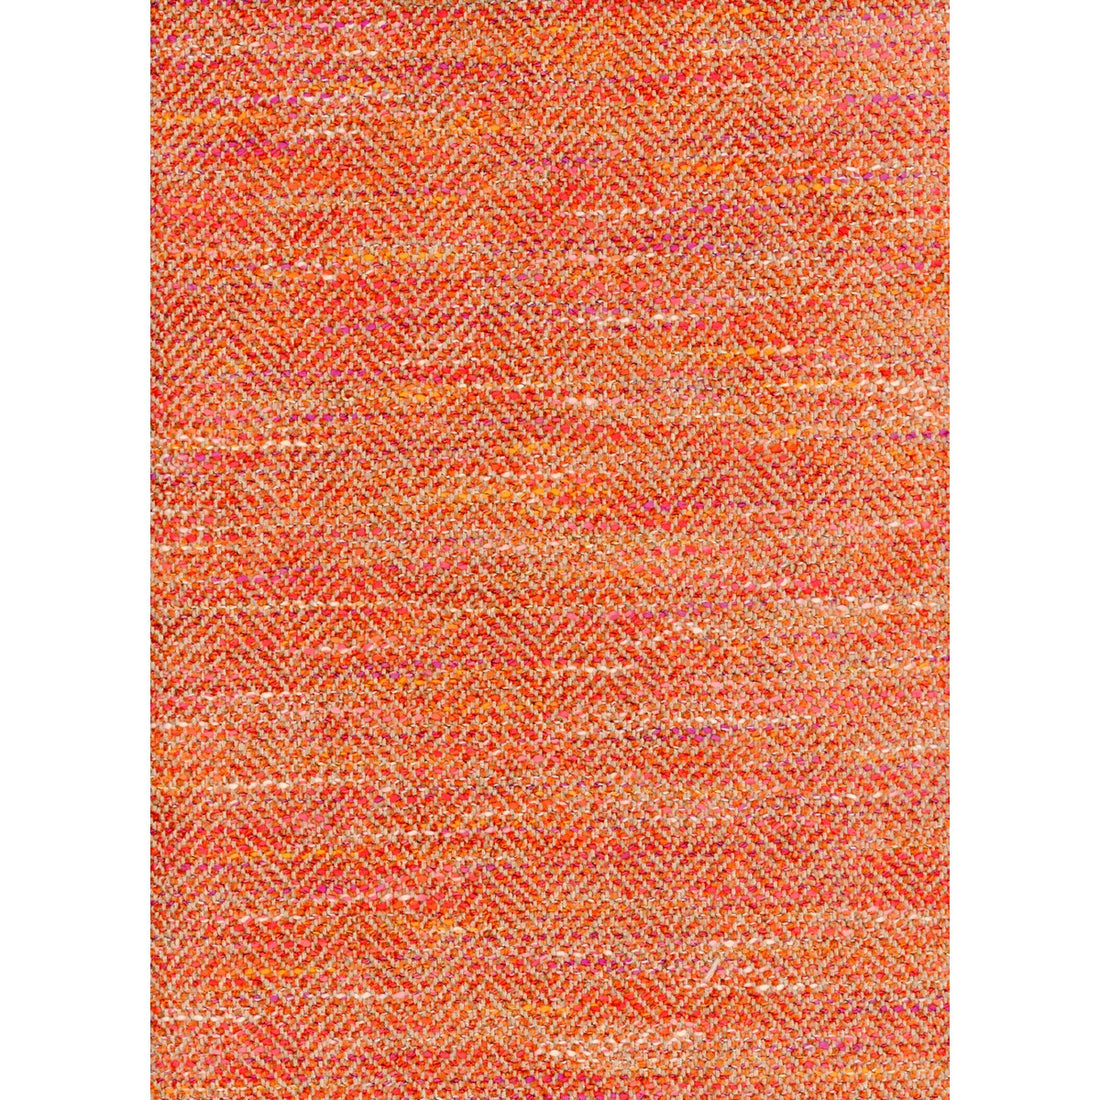 Delphini fabric in cinnamon color - pattern AM100298.12.0 - by Kravet Couture in the Andrew Martin Portofino collection